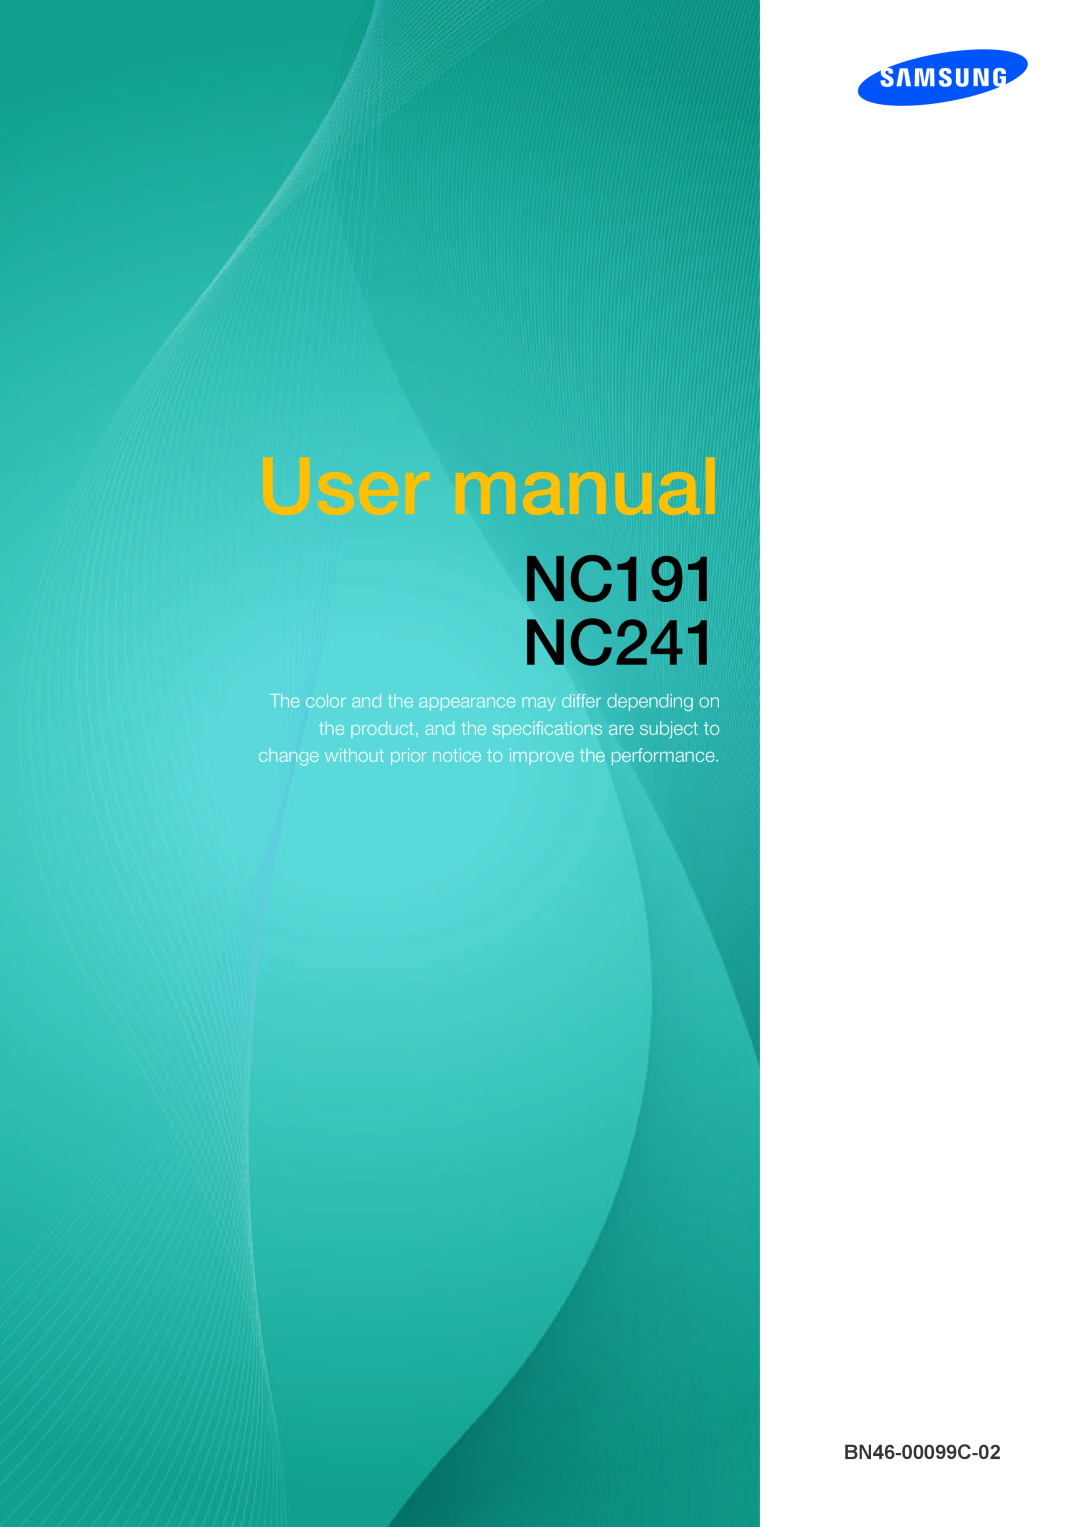 Samsung NC190-T, NC241T user manual User manual, NC191 NC241, BN46-00099C-02 